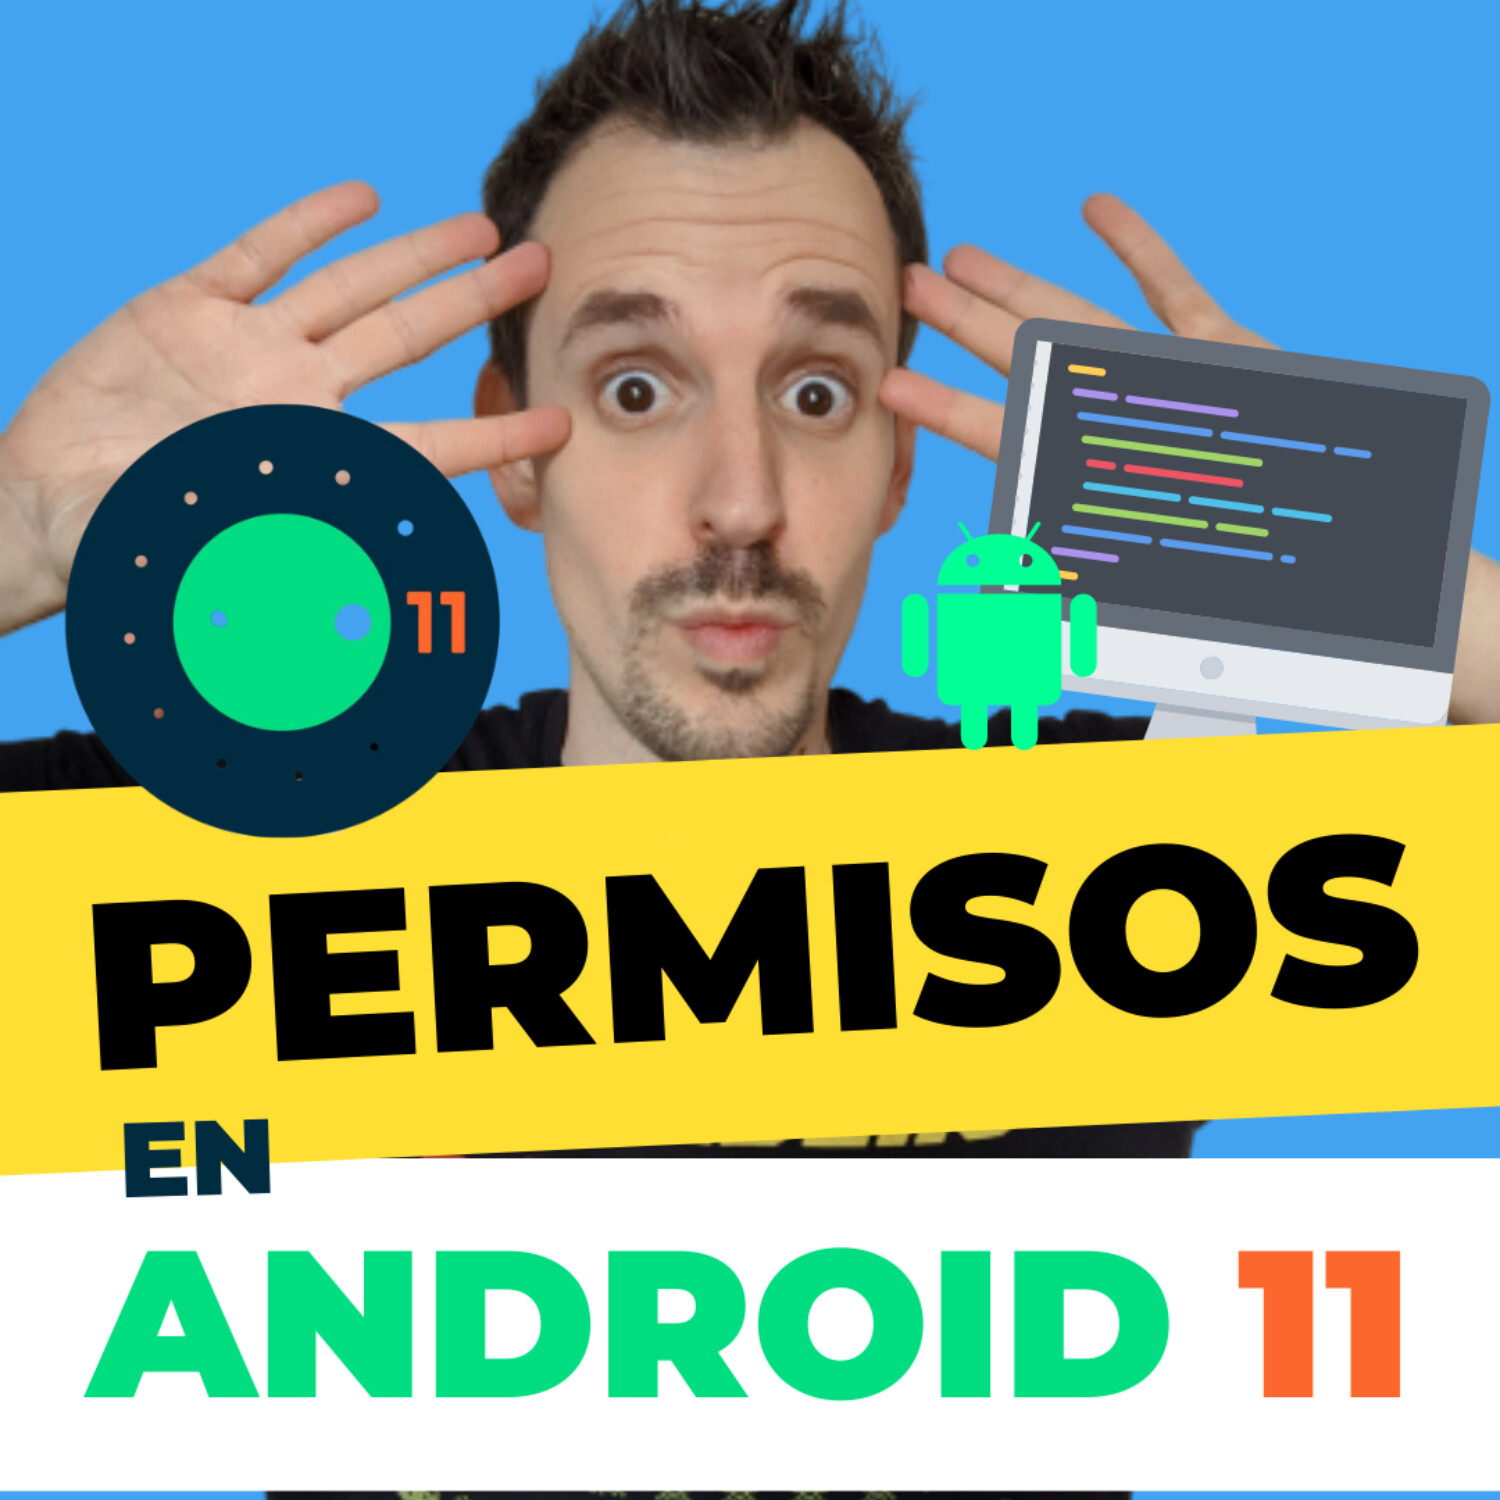 ✋PERMISOS en Android 11: Tutorial paso a paso | EP 049